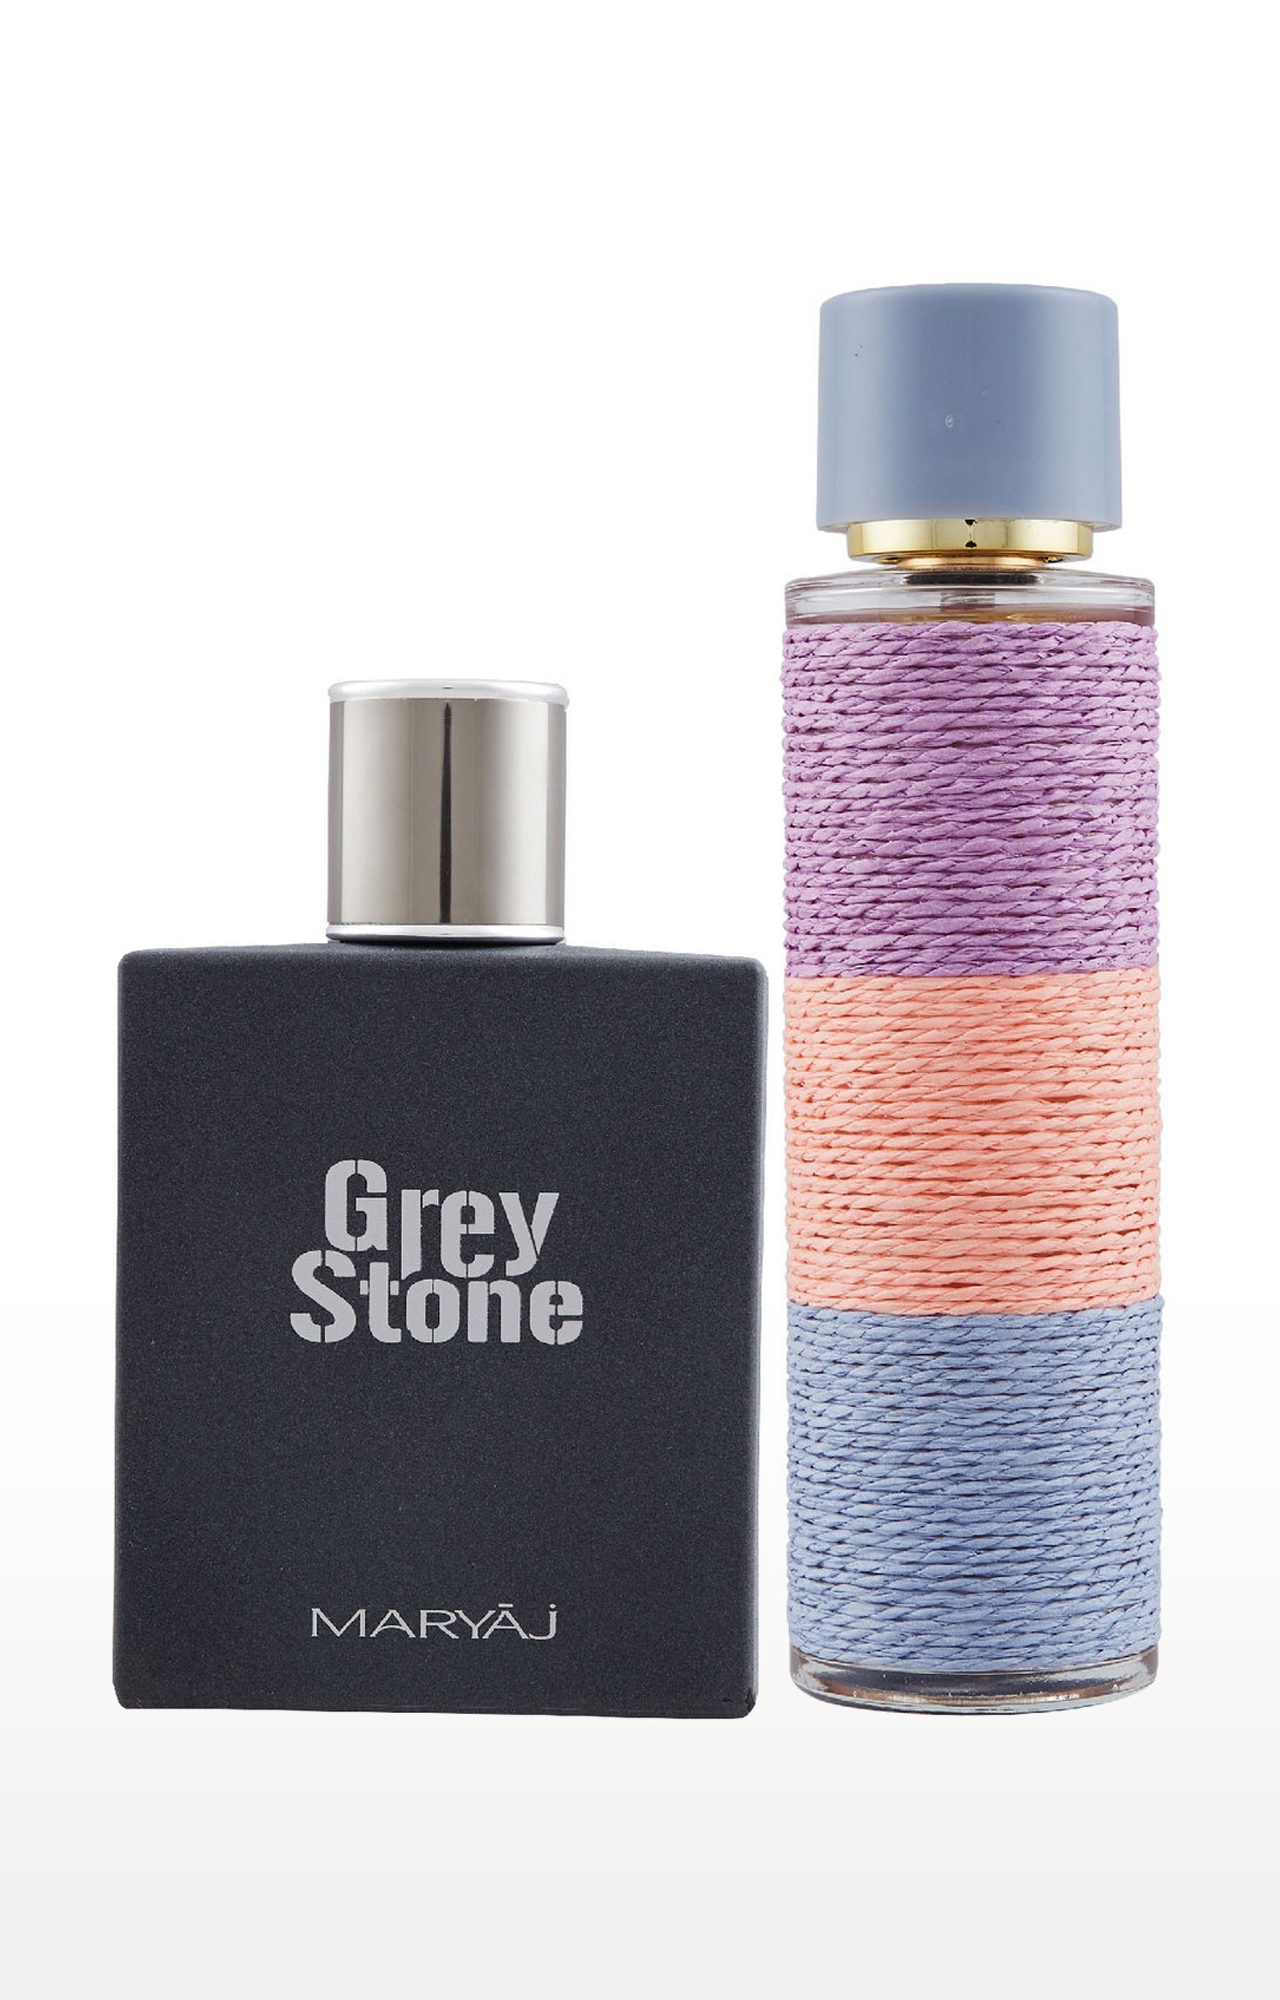 Maryaj Grey Stone Eau De Parfum Perfume 100ml for Men and Maryaj Deuce Femme Eau De Parfum Fruity Perfume 100ml for WoMen